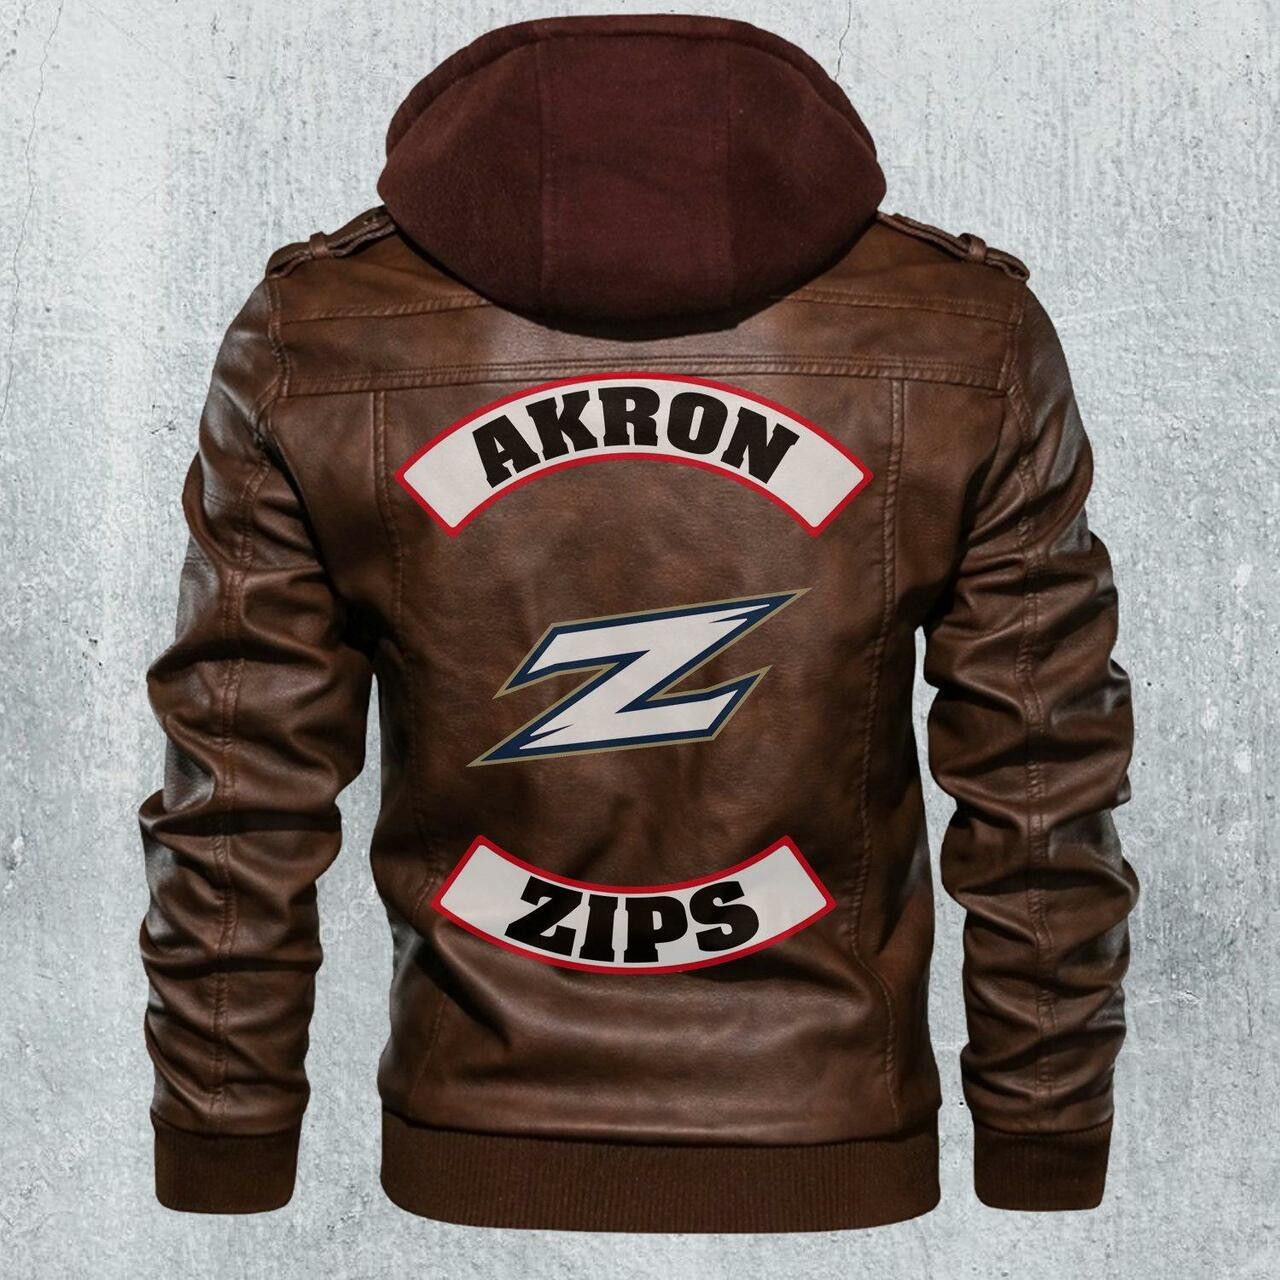 Top leather jacket Sells Best on Techcomshop 7